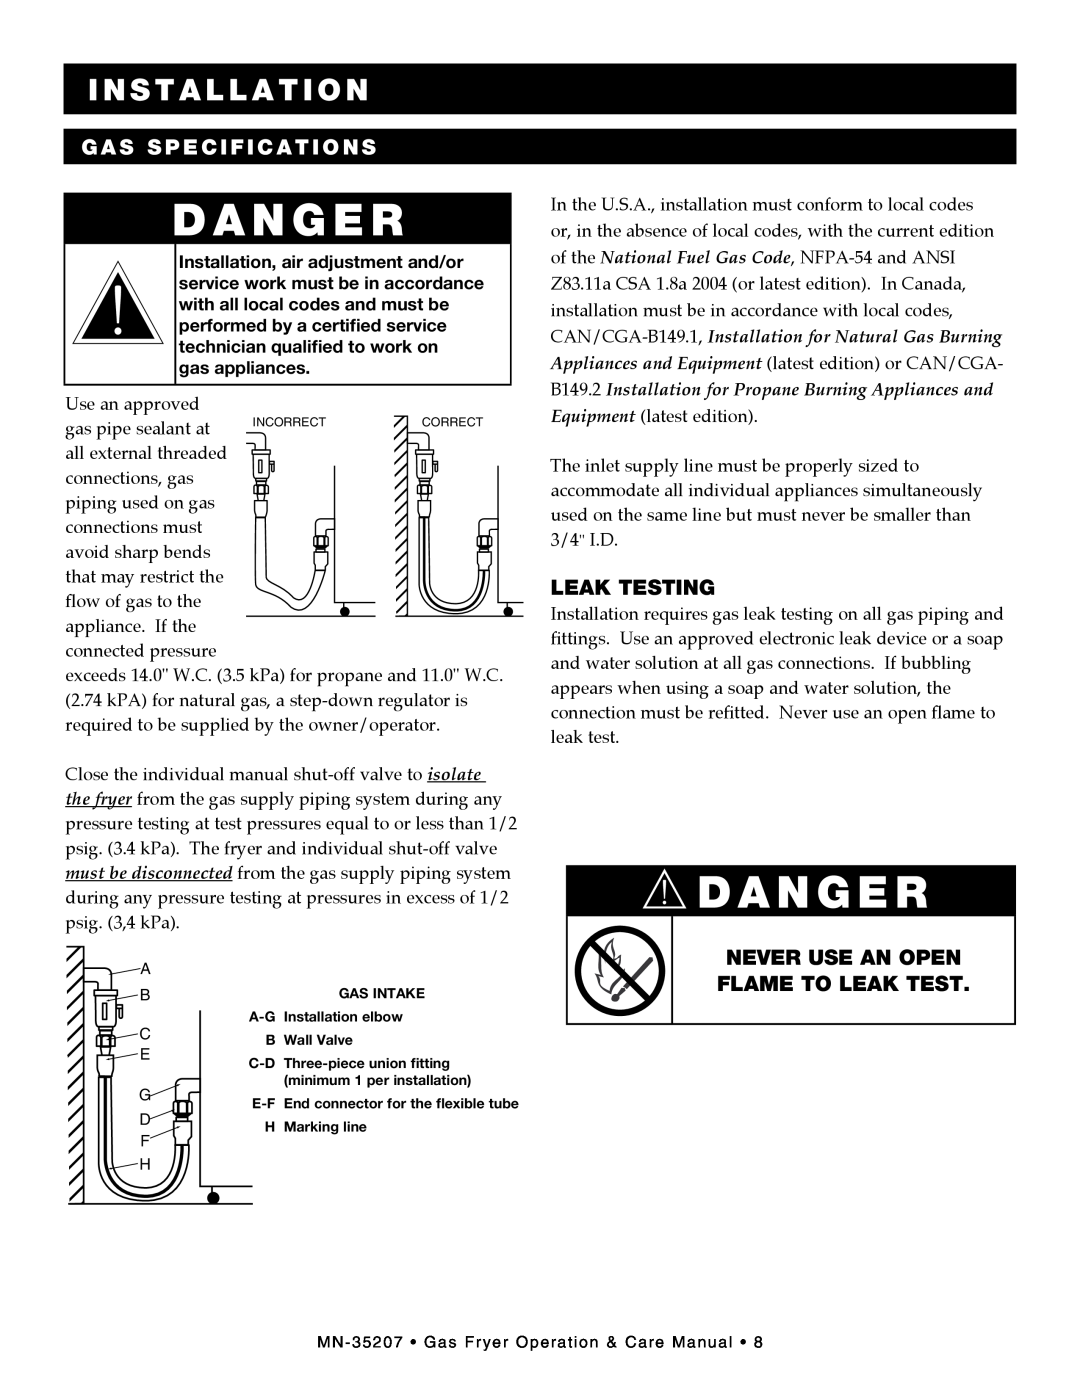 Alto-Shaam Gas Fryer, ASF-60G manual Leak Testing, Never Use An Open Flame To Leak Test, d A N G E R, dANGER, installation 